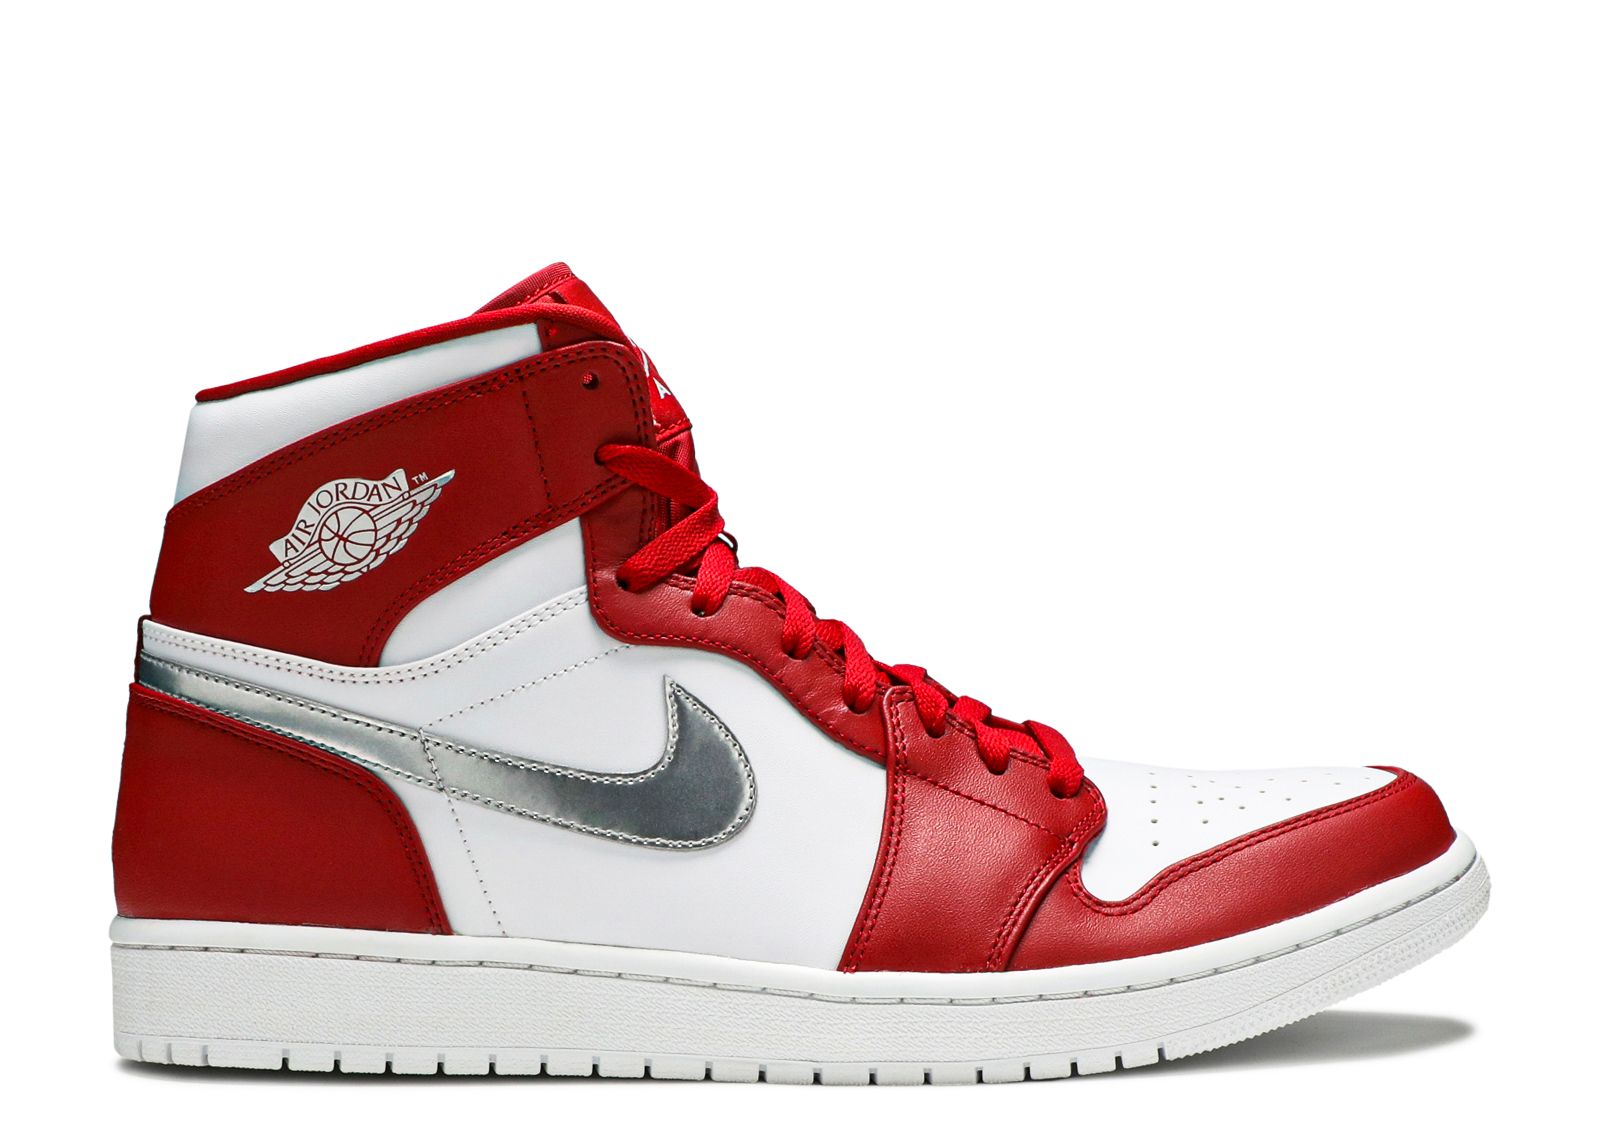 Nike Air Jordan 1 Retro High Legends of The Summer Chrome Toe | Size 10.5, Sneaker in Red/Black/Silver